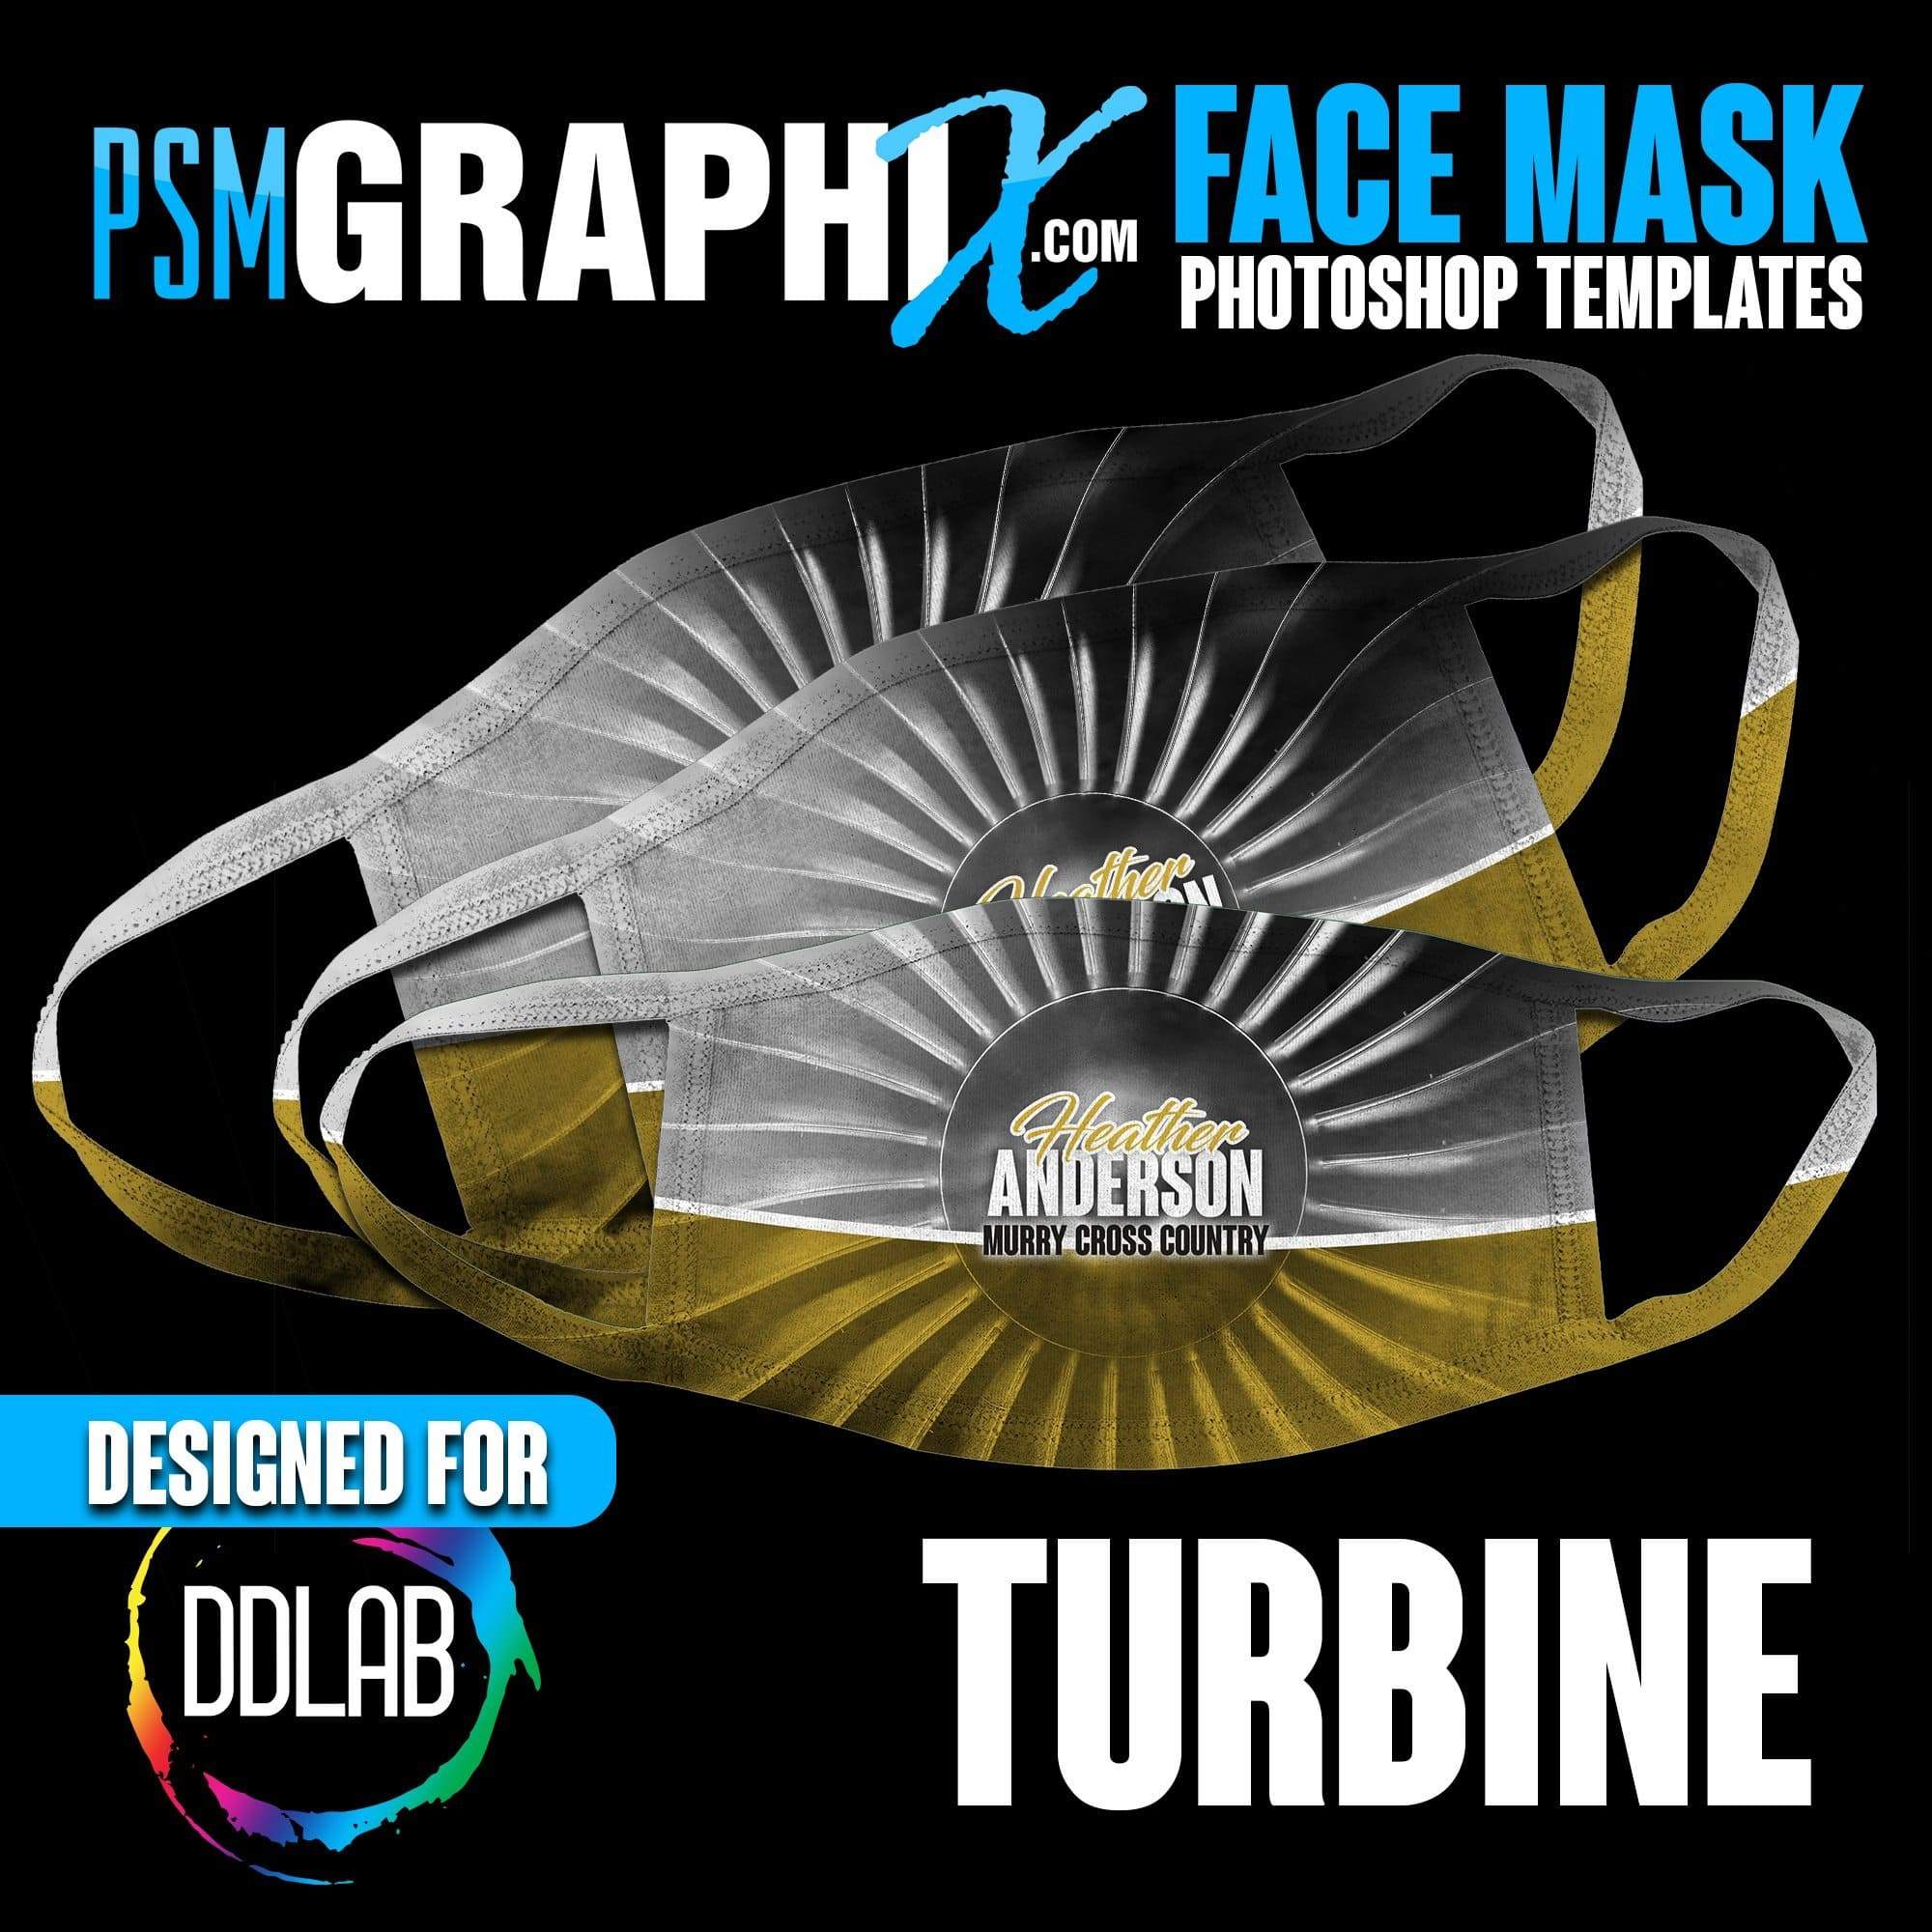 Turbine - Face Mask Template Set (DDLAB) 3 Sizes-Photoshop Template - PSMGraphix